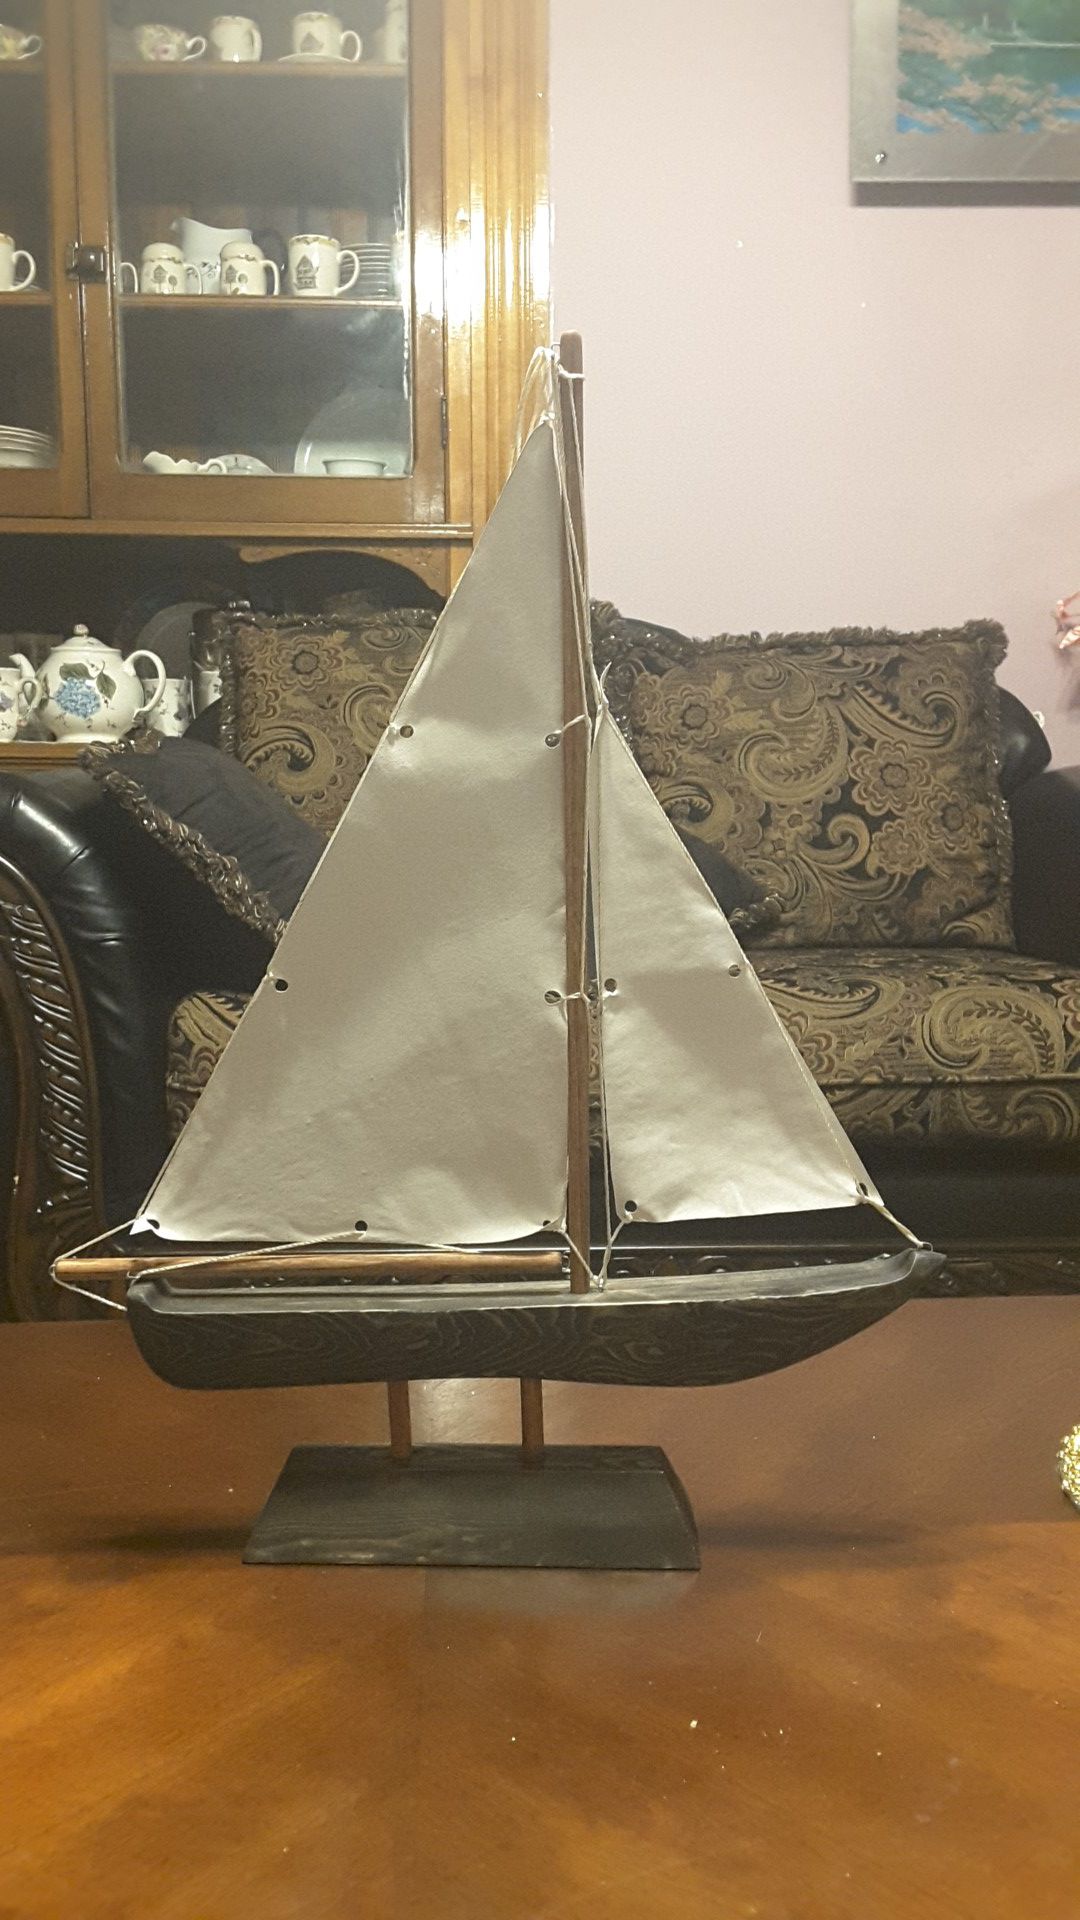 Miniature Sailboat